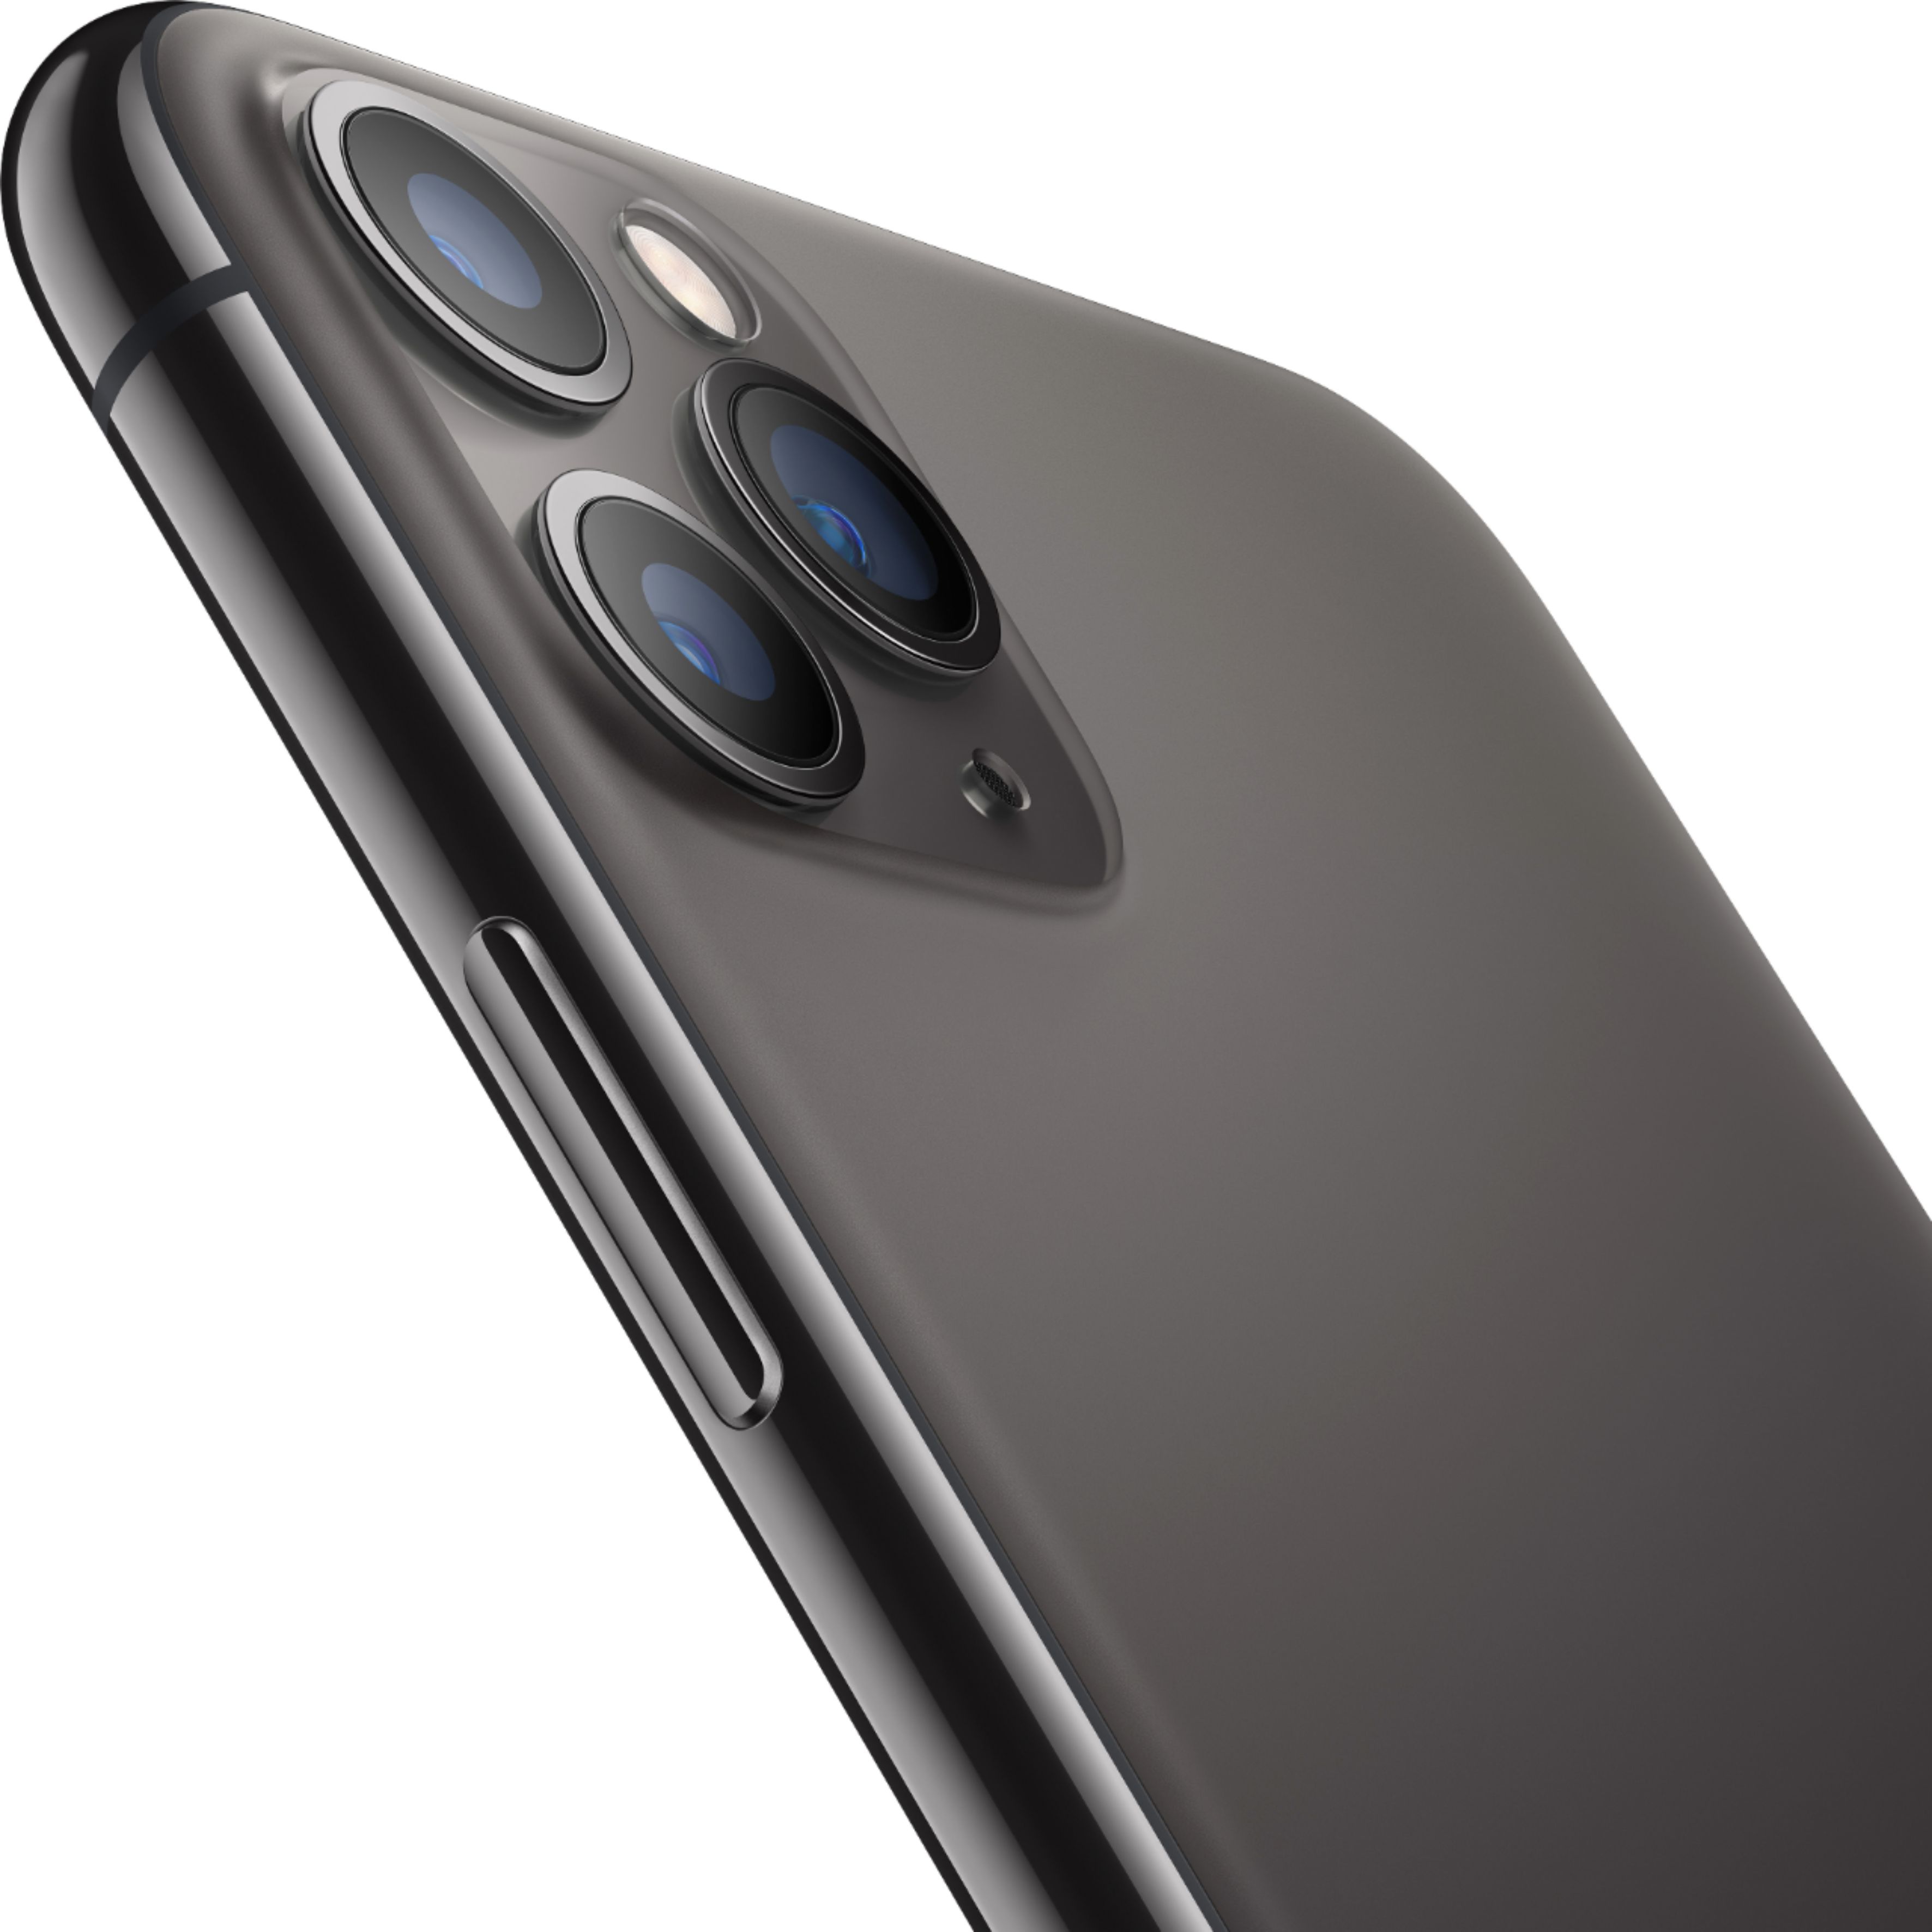 Apple iPhone 11 Pro 64GB Space Gray (Verizon) MWCH2LL/A